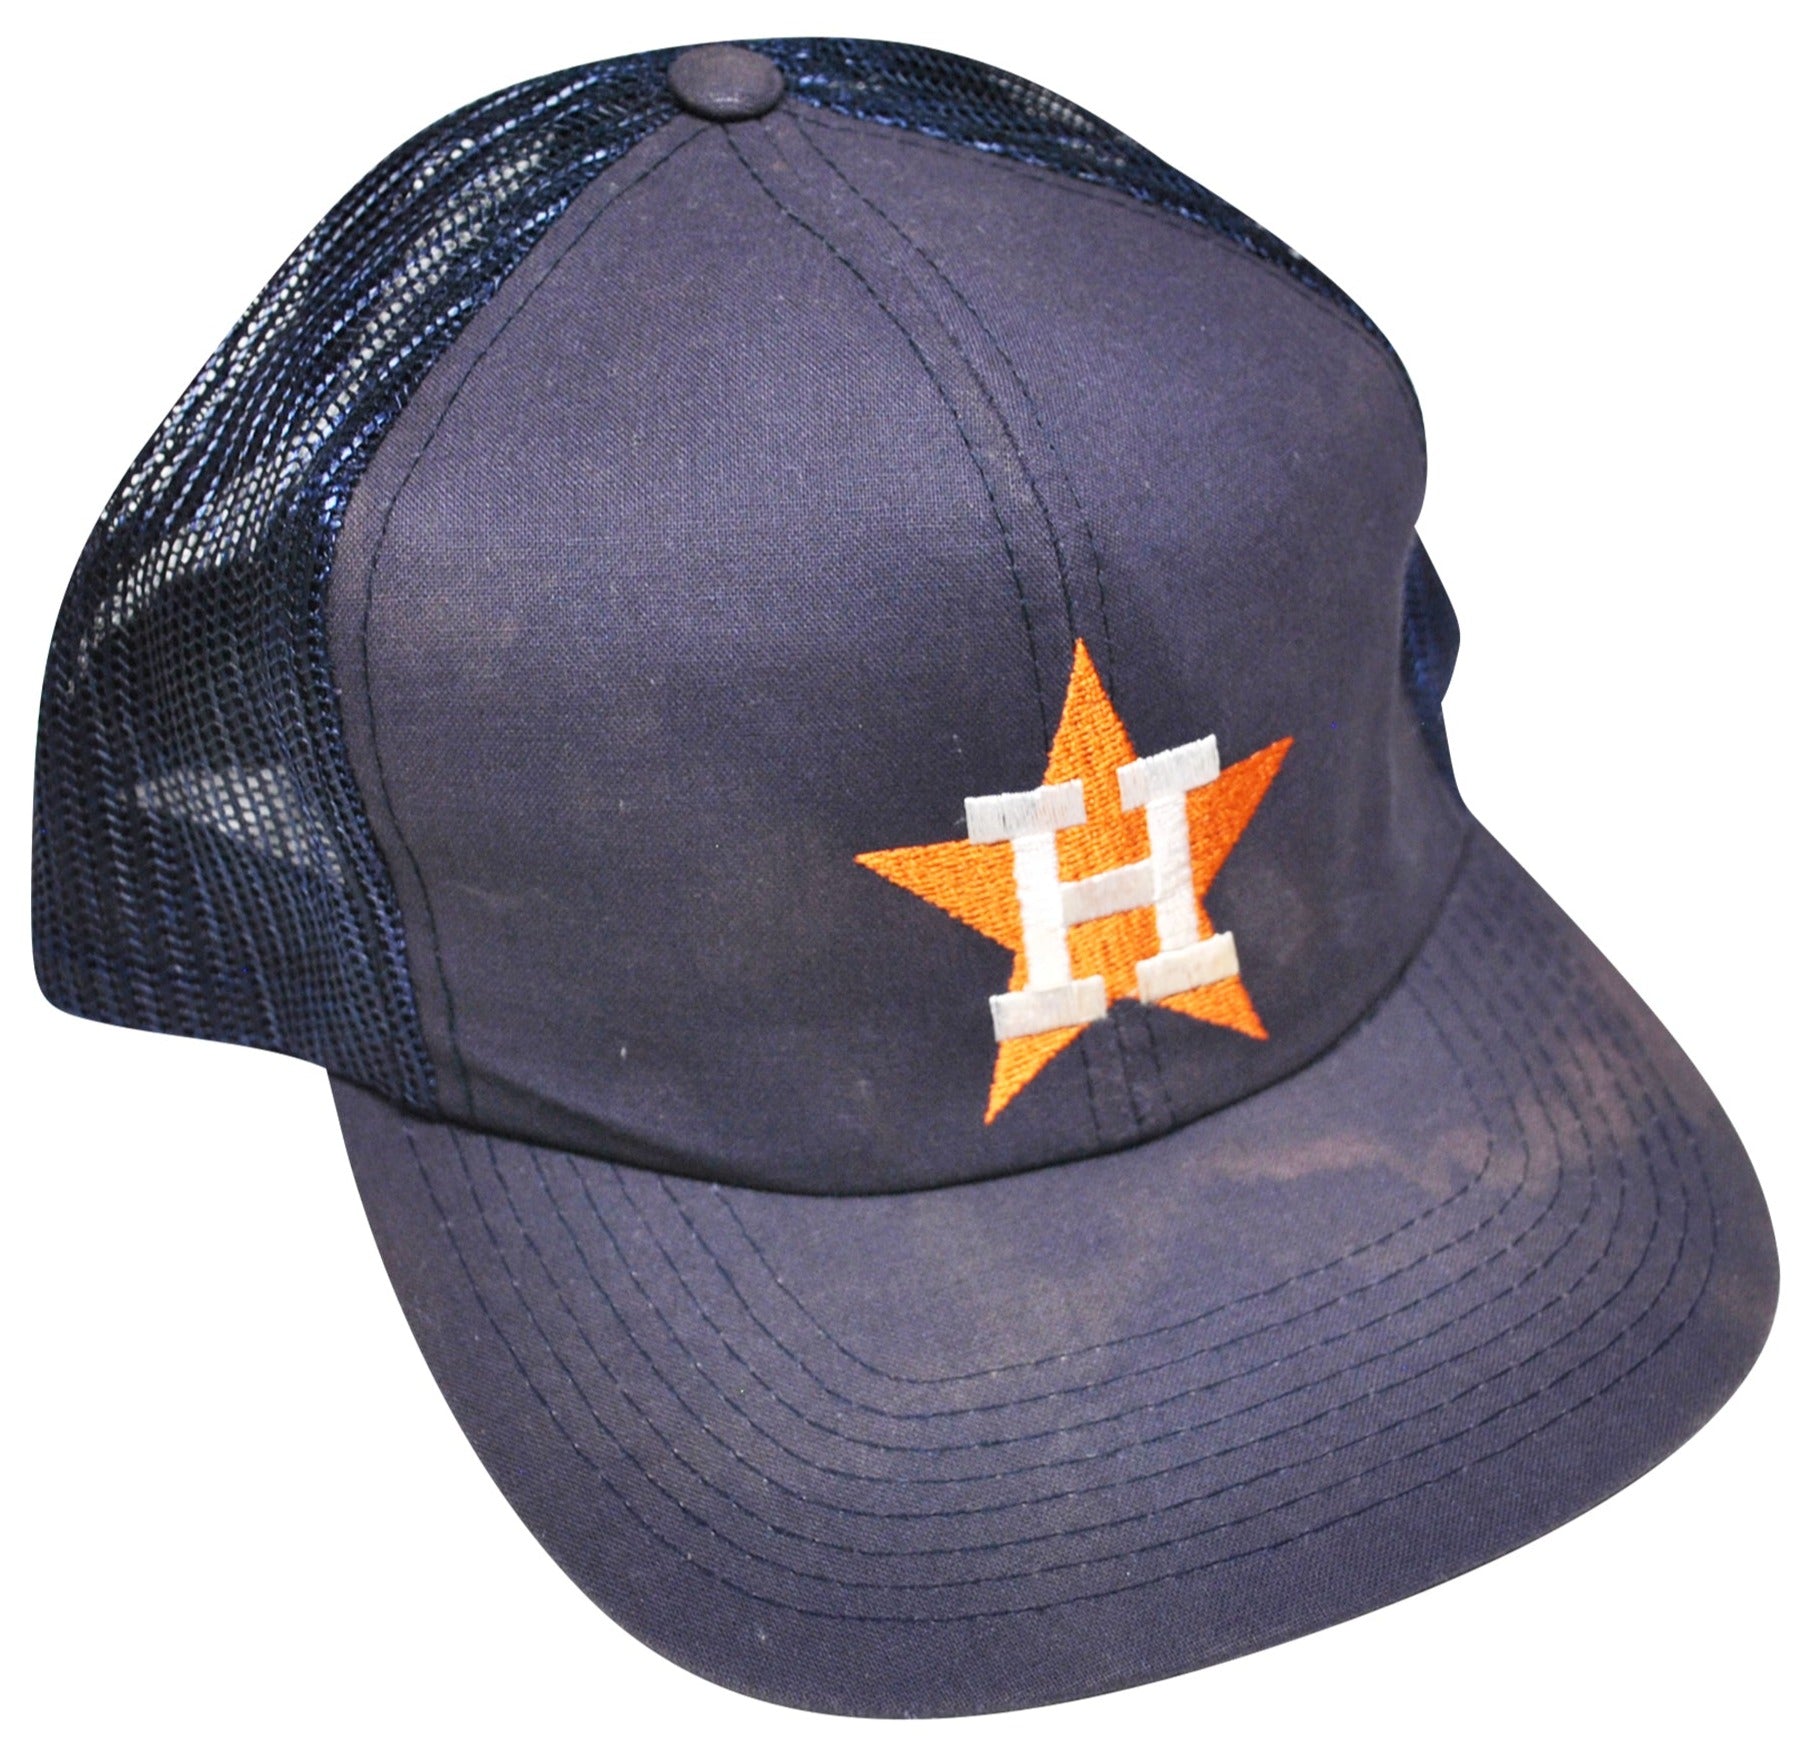 throwback houston astros hat